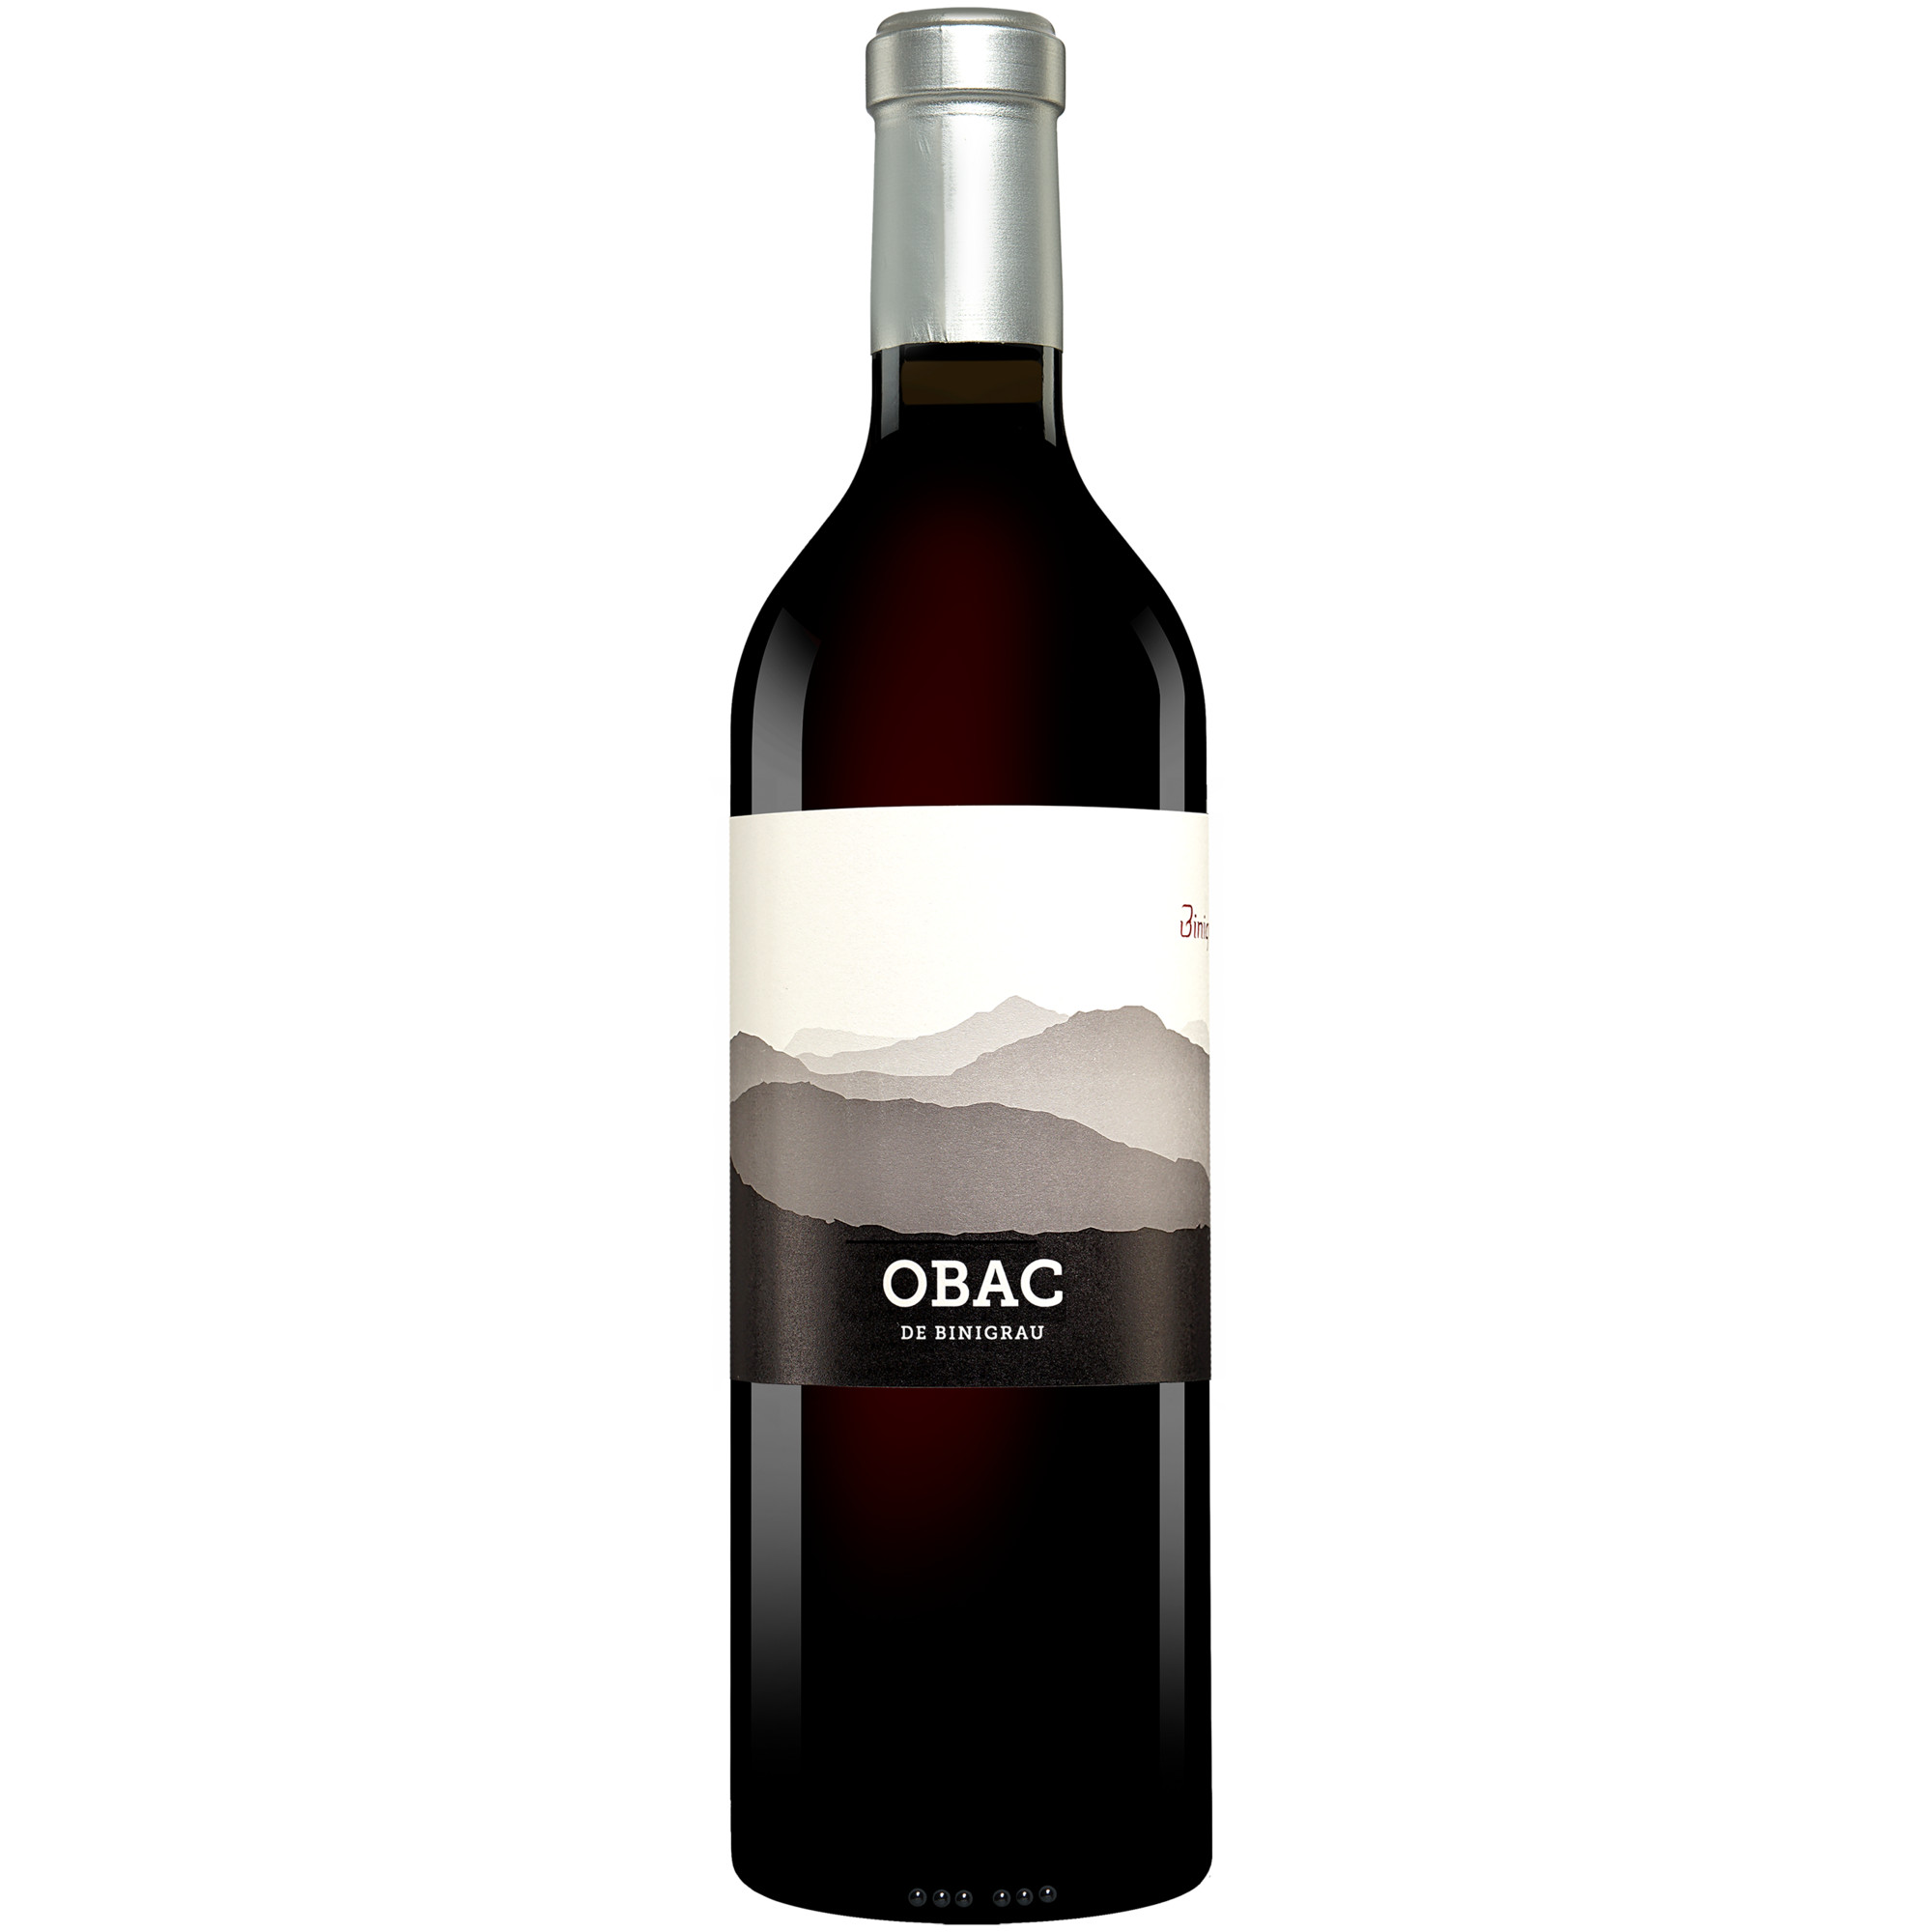 Image of Binigrau Negre Obac 2020 0.75L 14.5% Vol. Rotwein Trocken aus Spanien